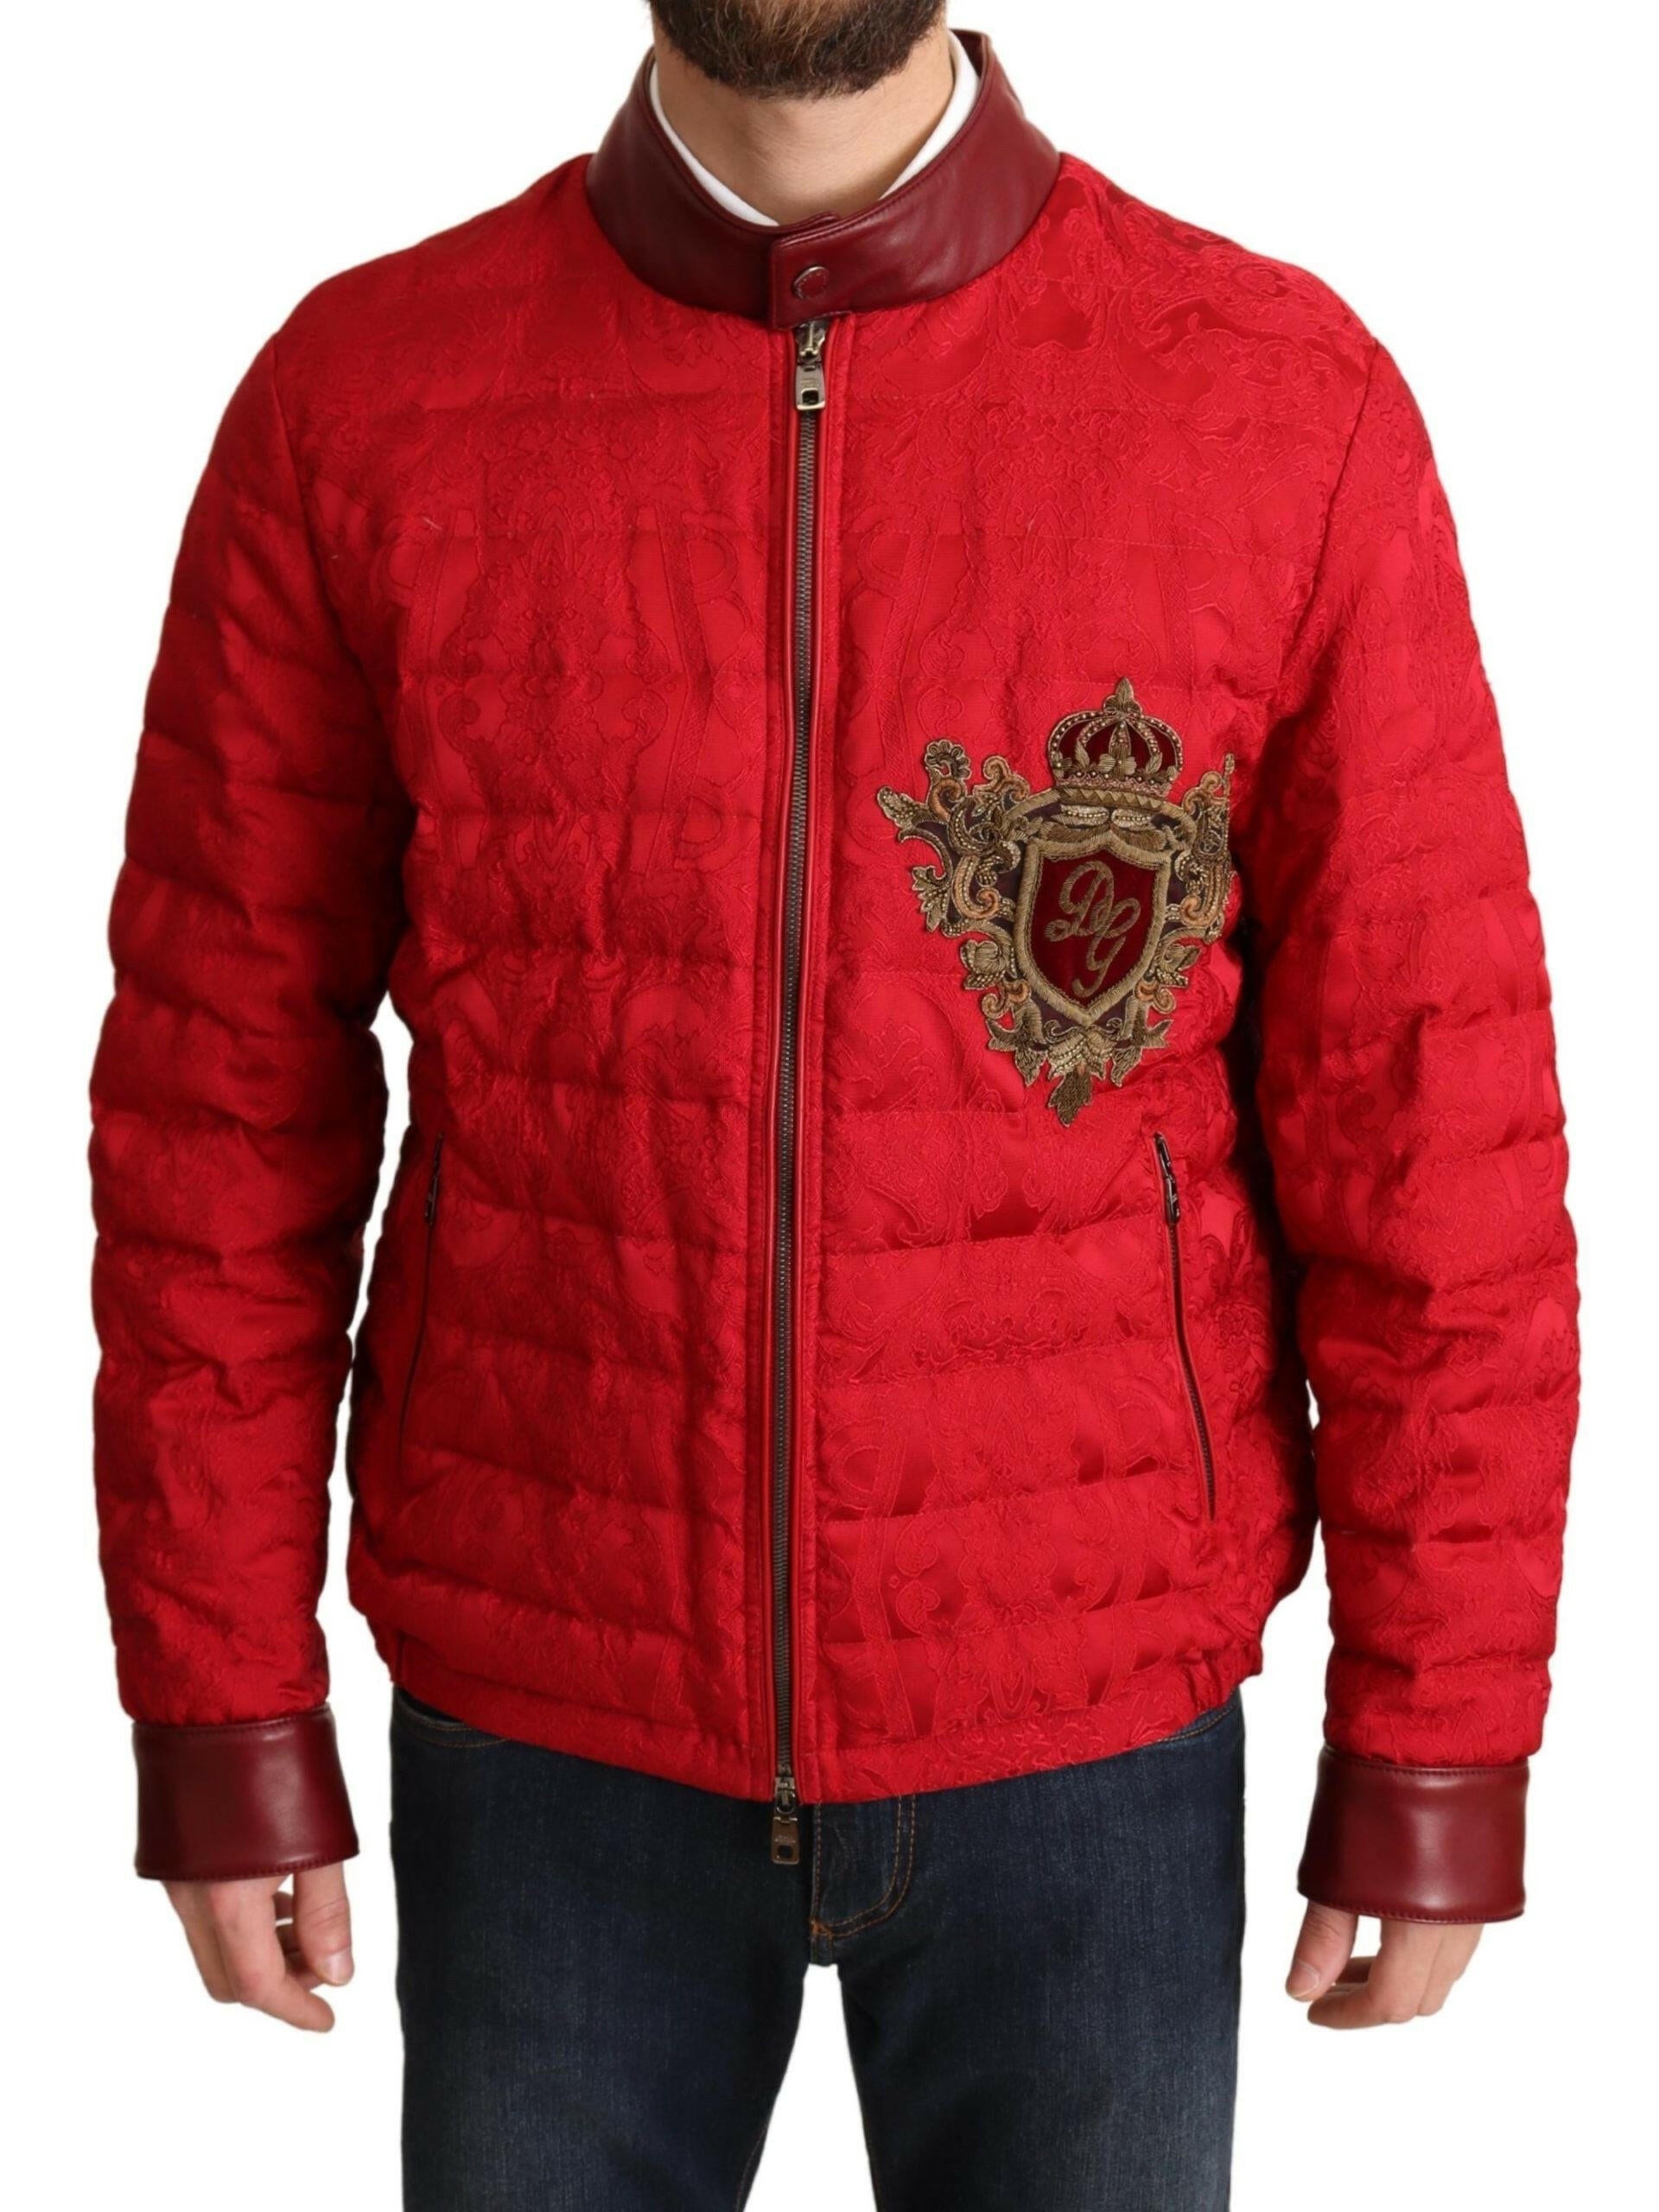 Dolce & Gabbana Red Brocade Bomber Gold Crown Logo Coat Jacket - GENUINE AUTHENTIC BRAND LLC  